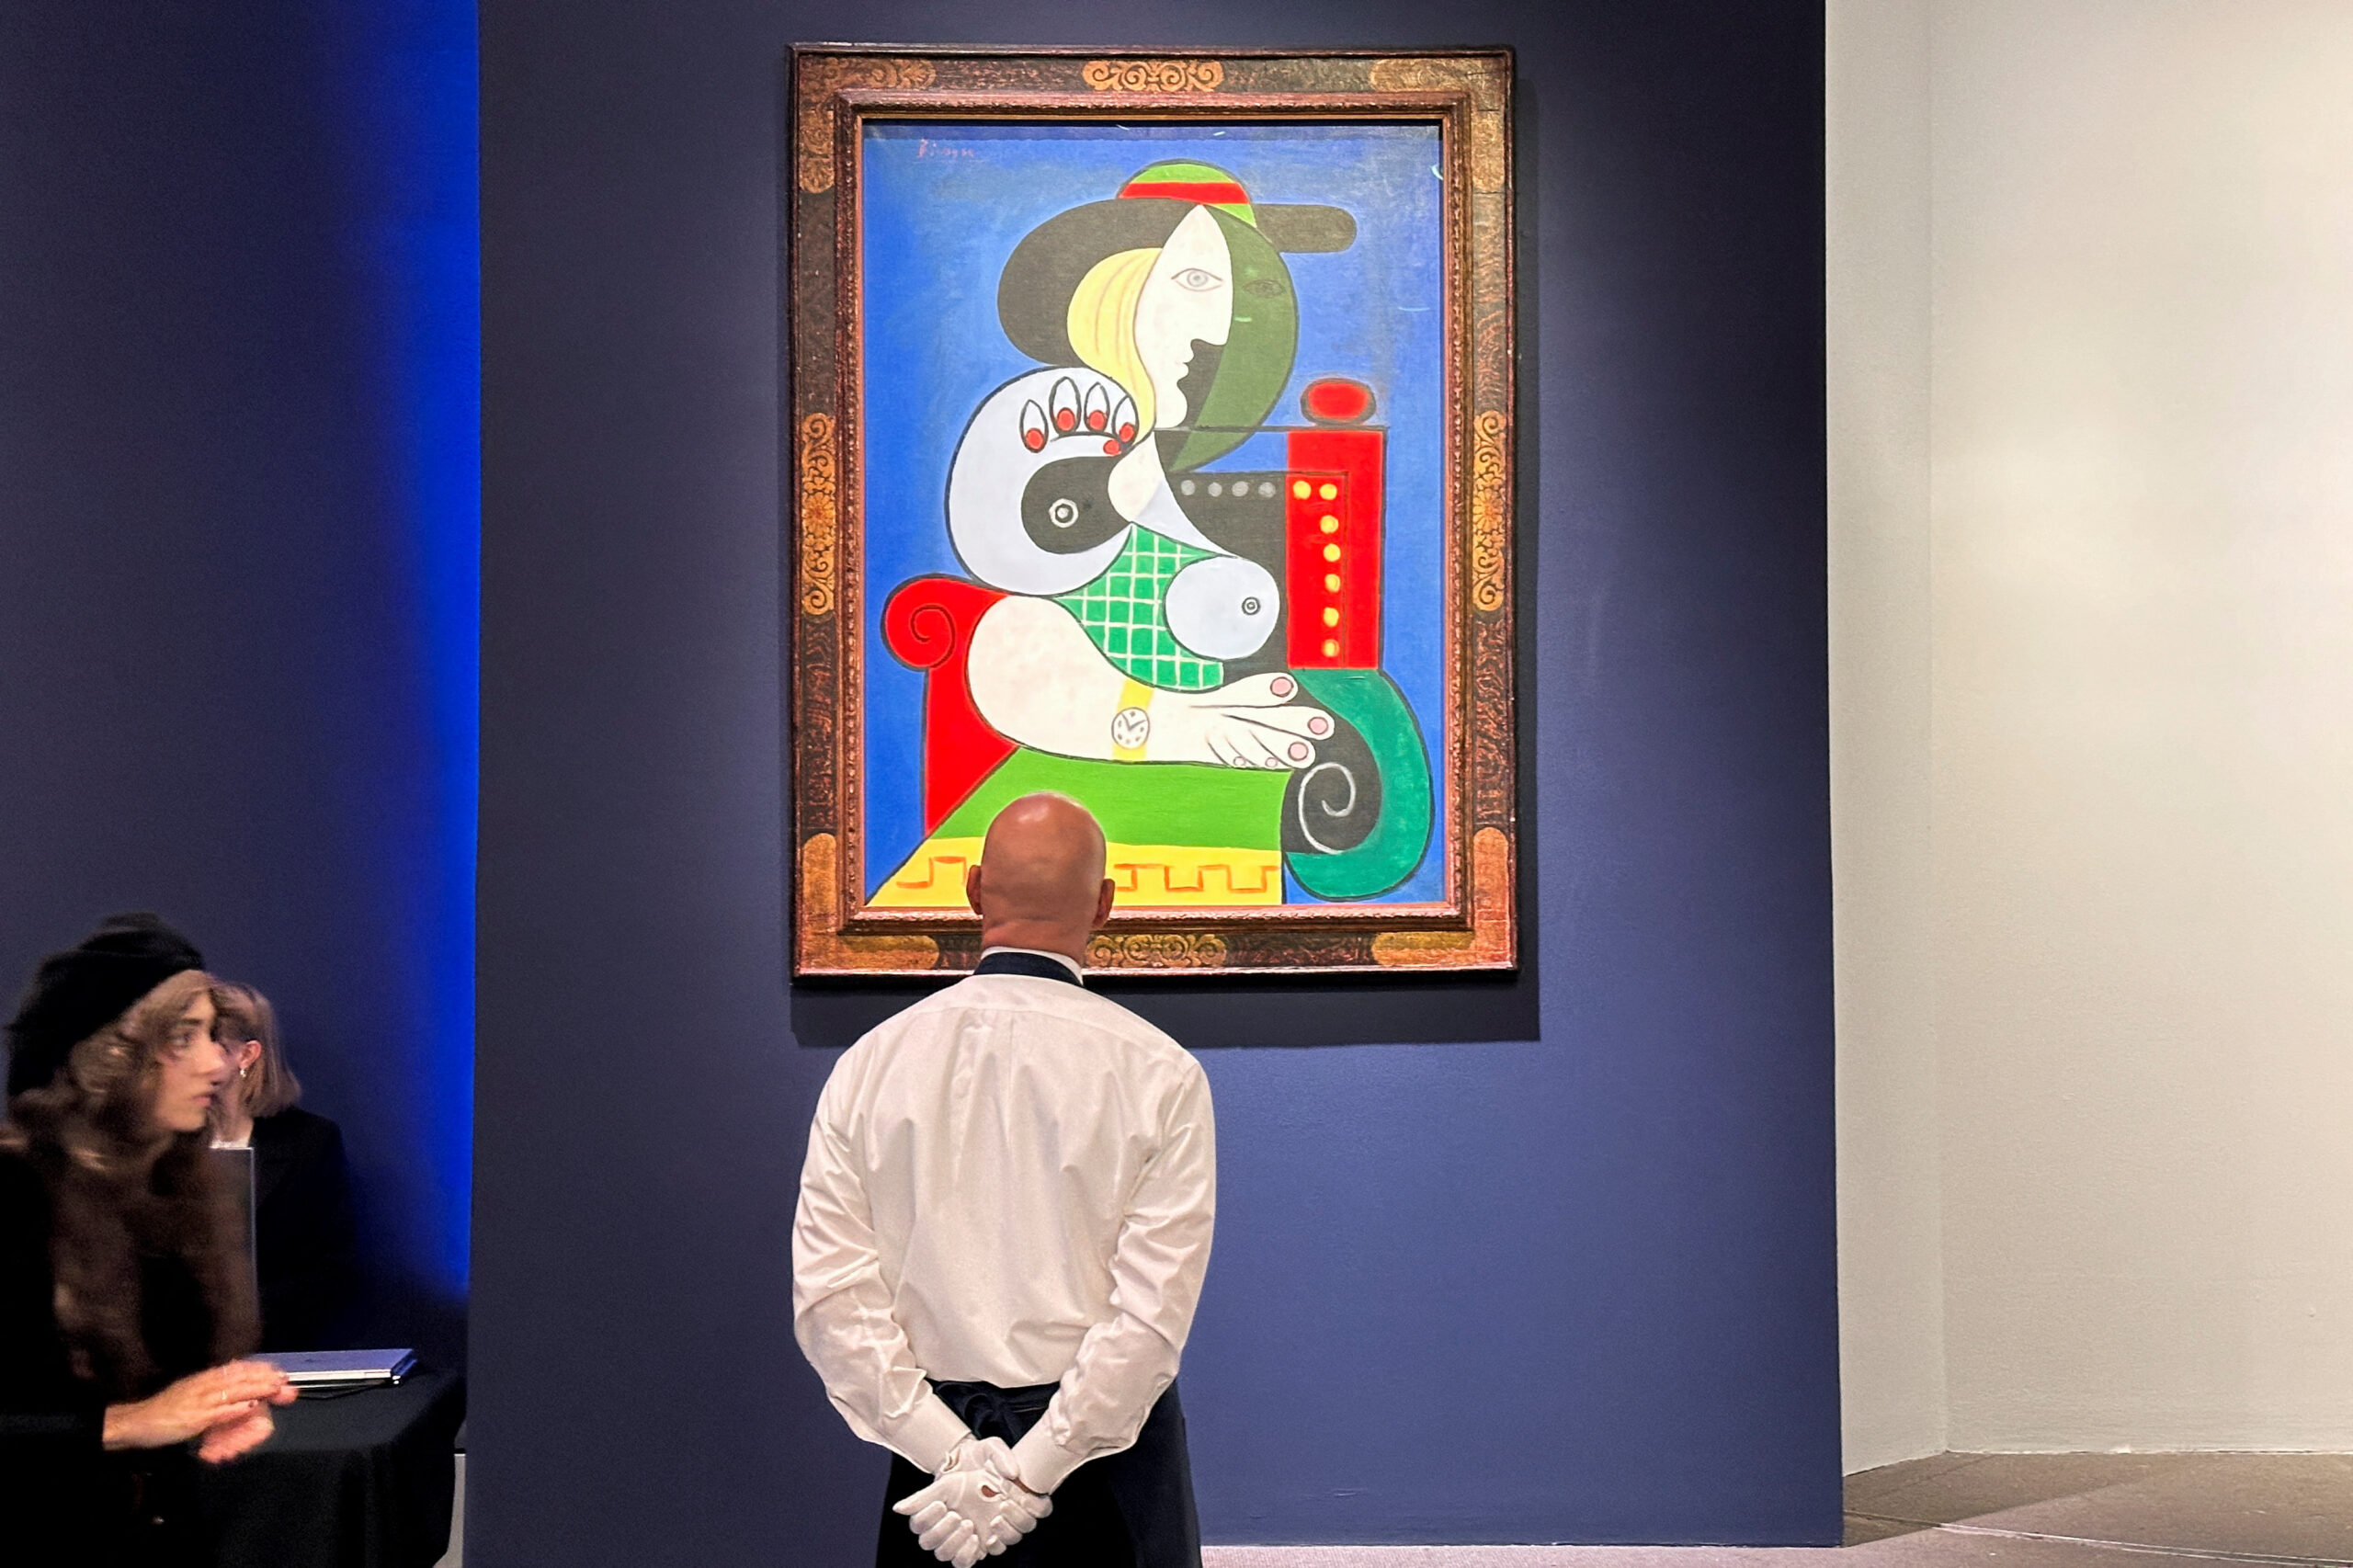 Pablo Picasso’s 1932 painting “Femme à la montre” sells for more than $139 million at a Sotheby’s New York auction